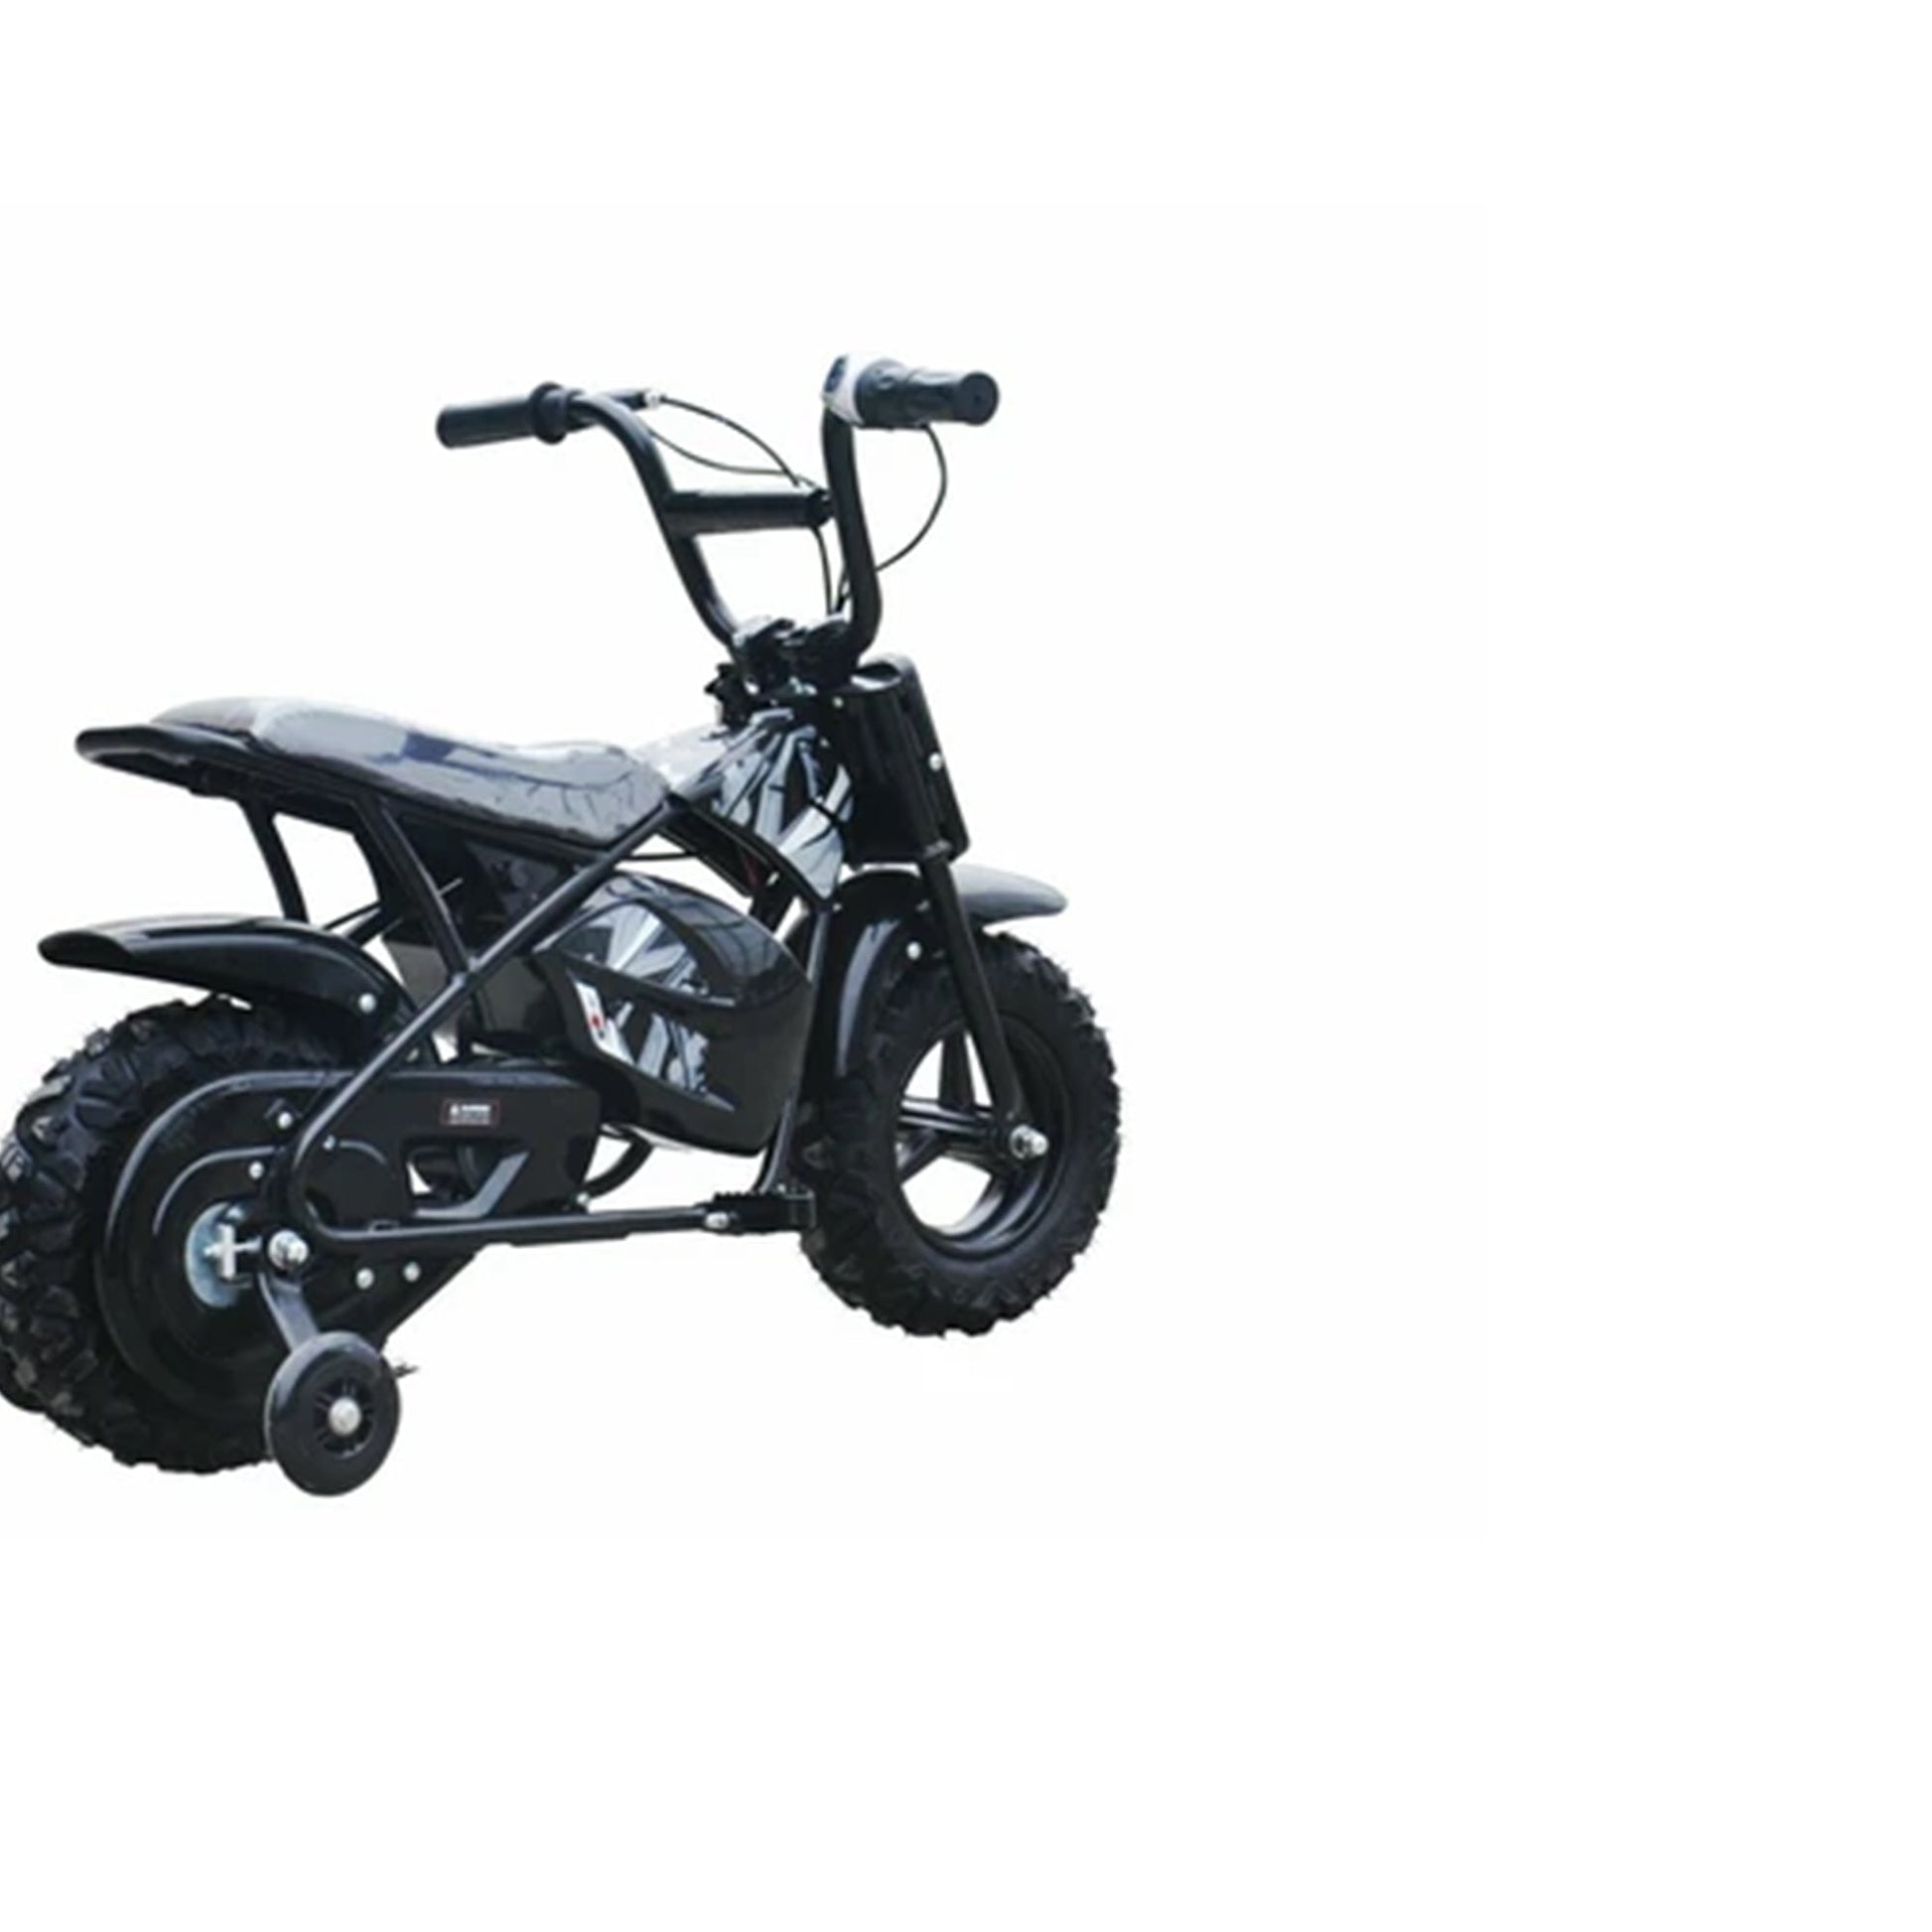 "Electric mini dirtbike scrambler 250 watt 12 volt with twist and go throttle on a white background."